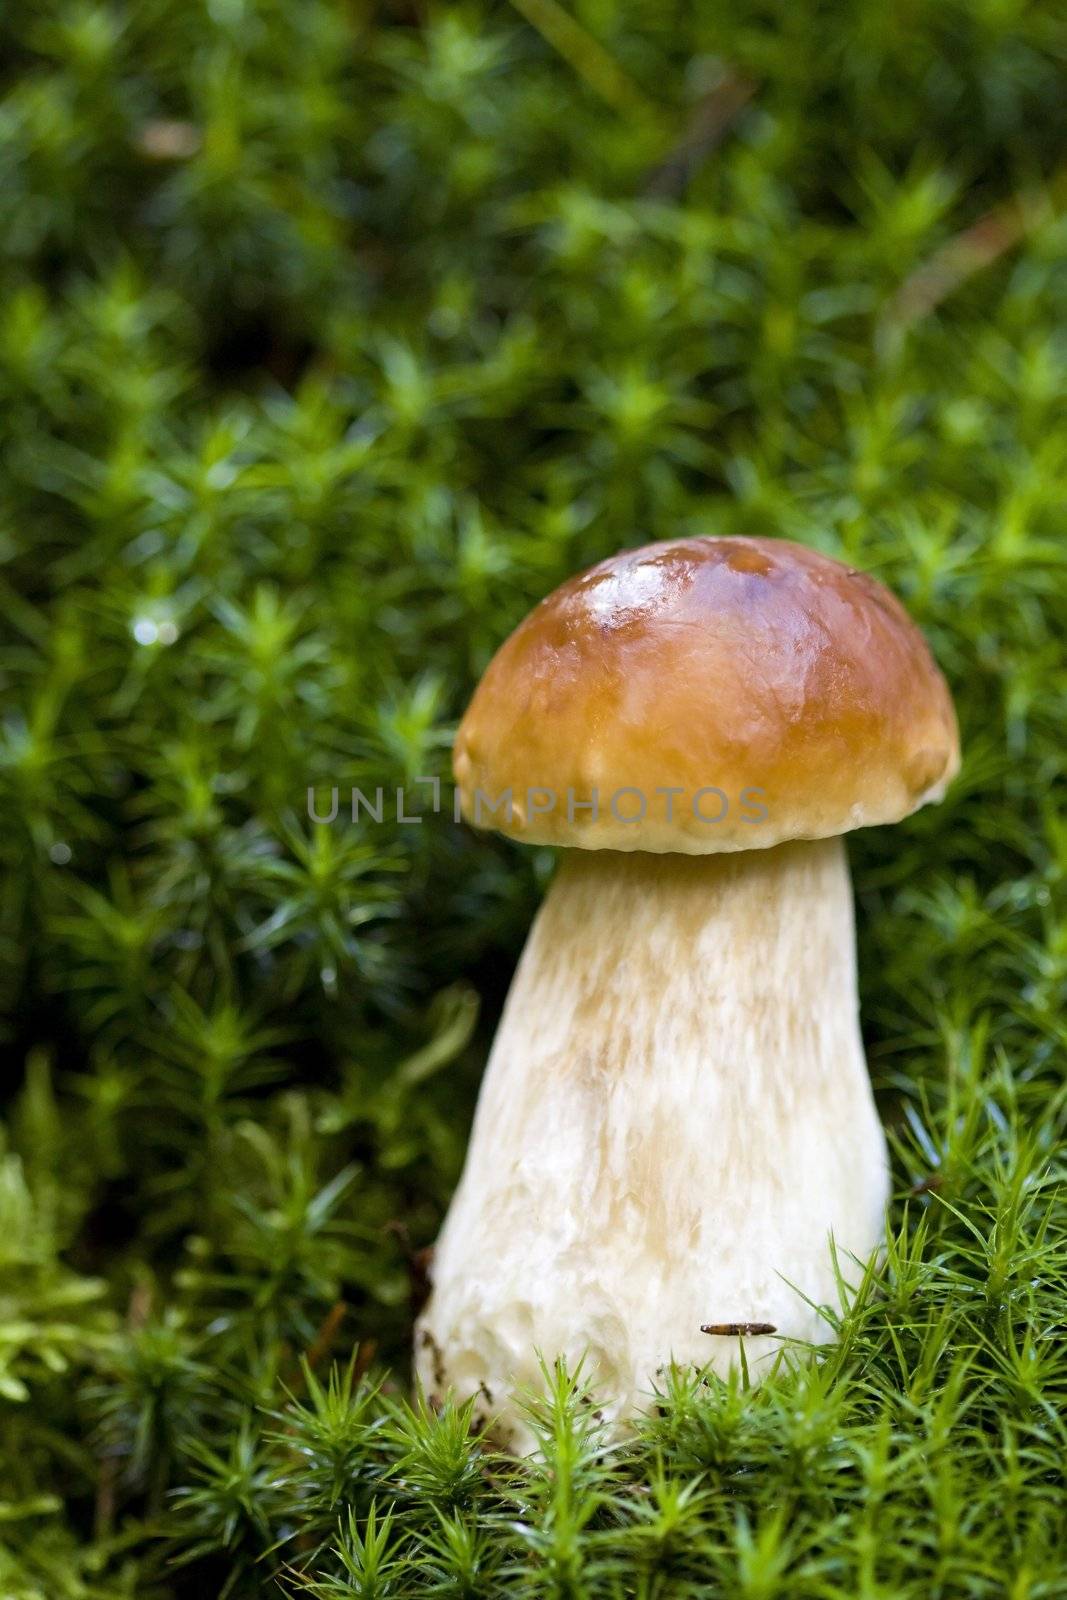 Mushroom in the wild by Gbuglok